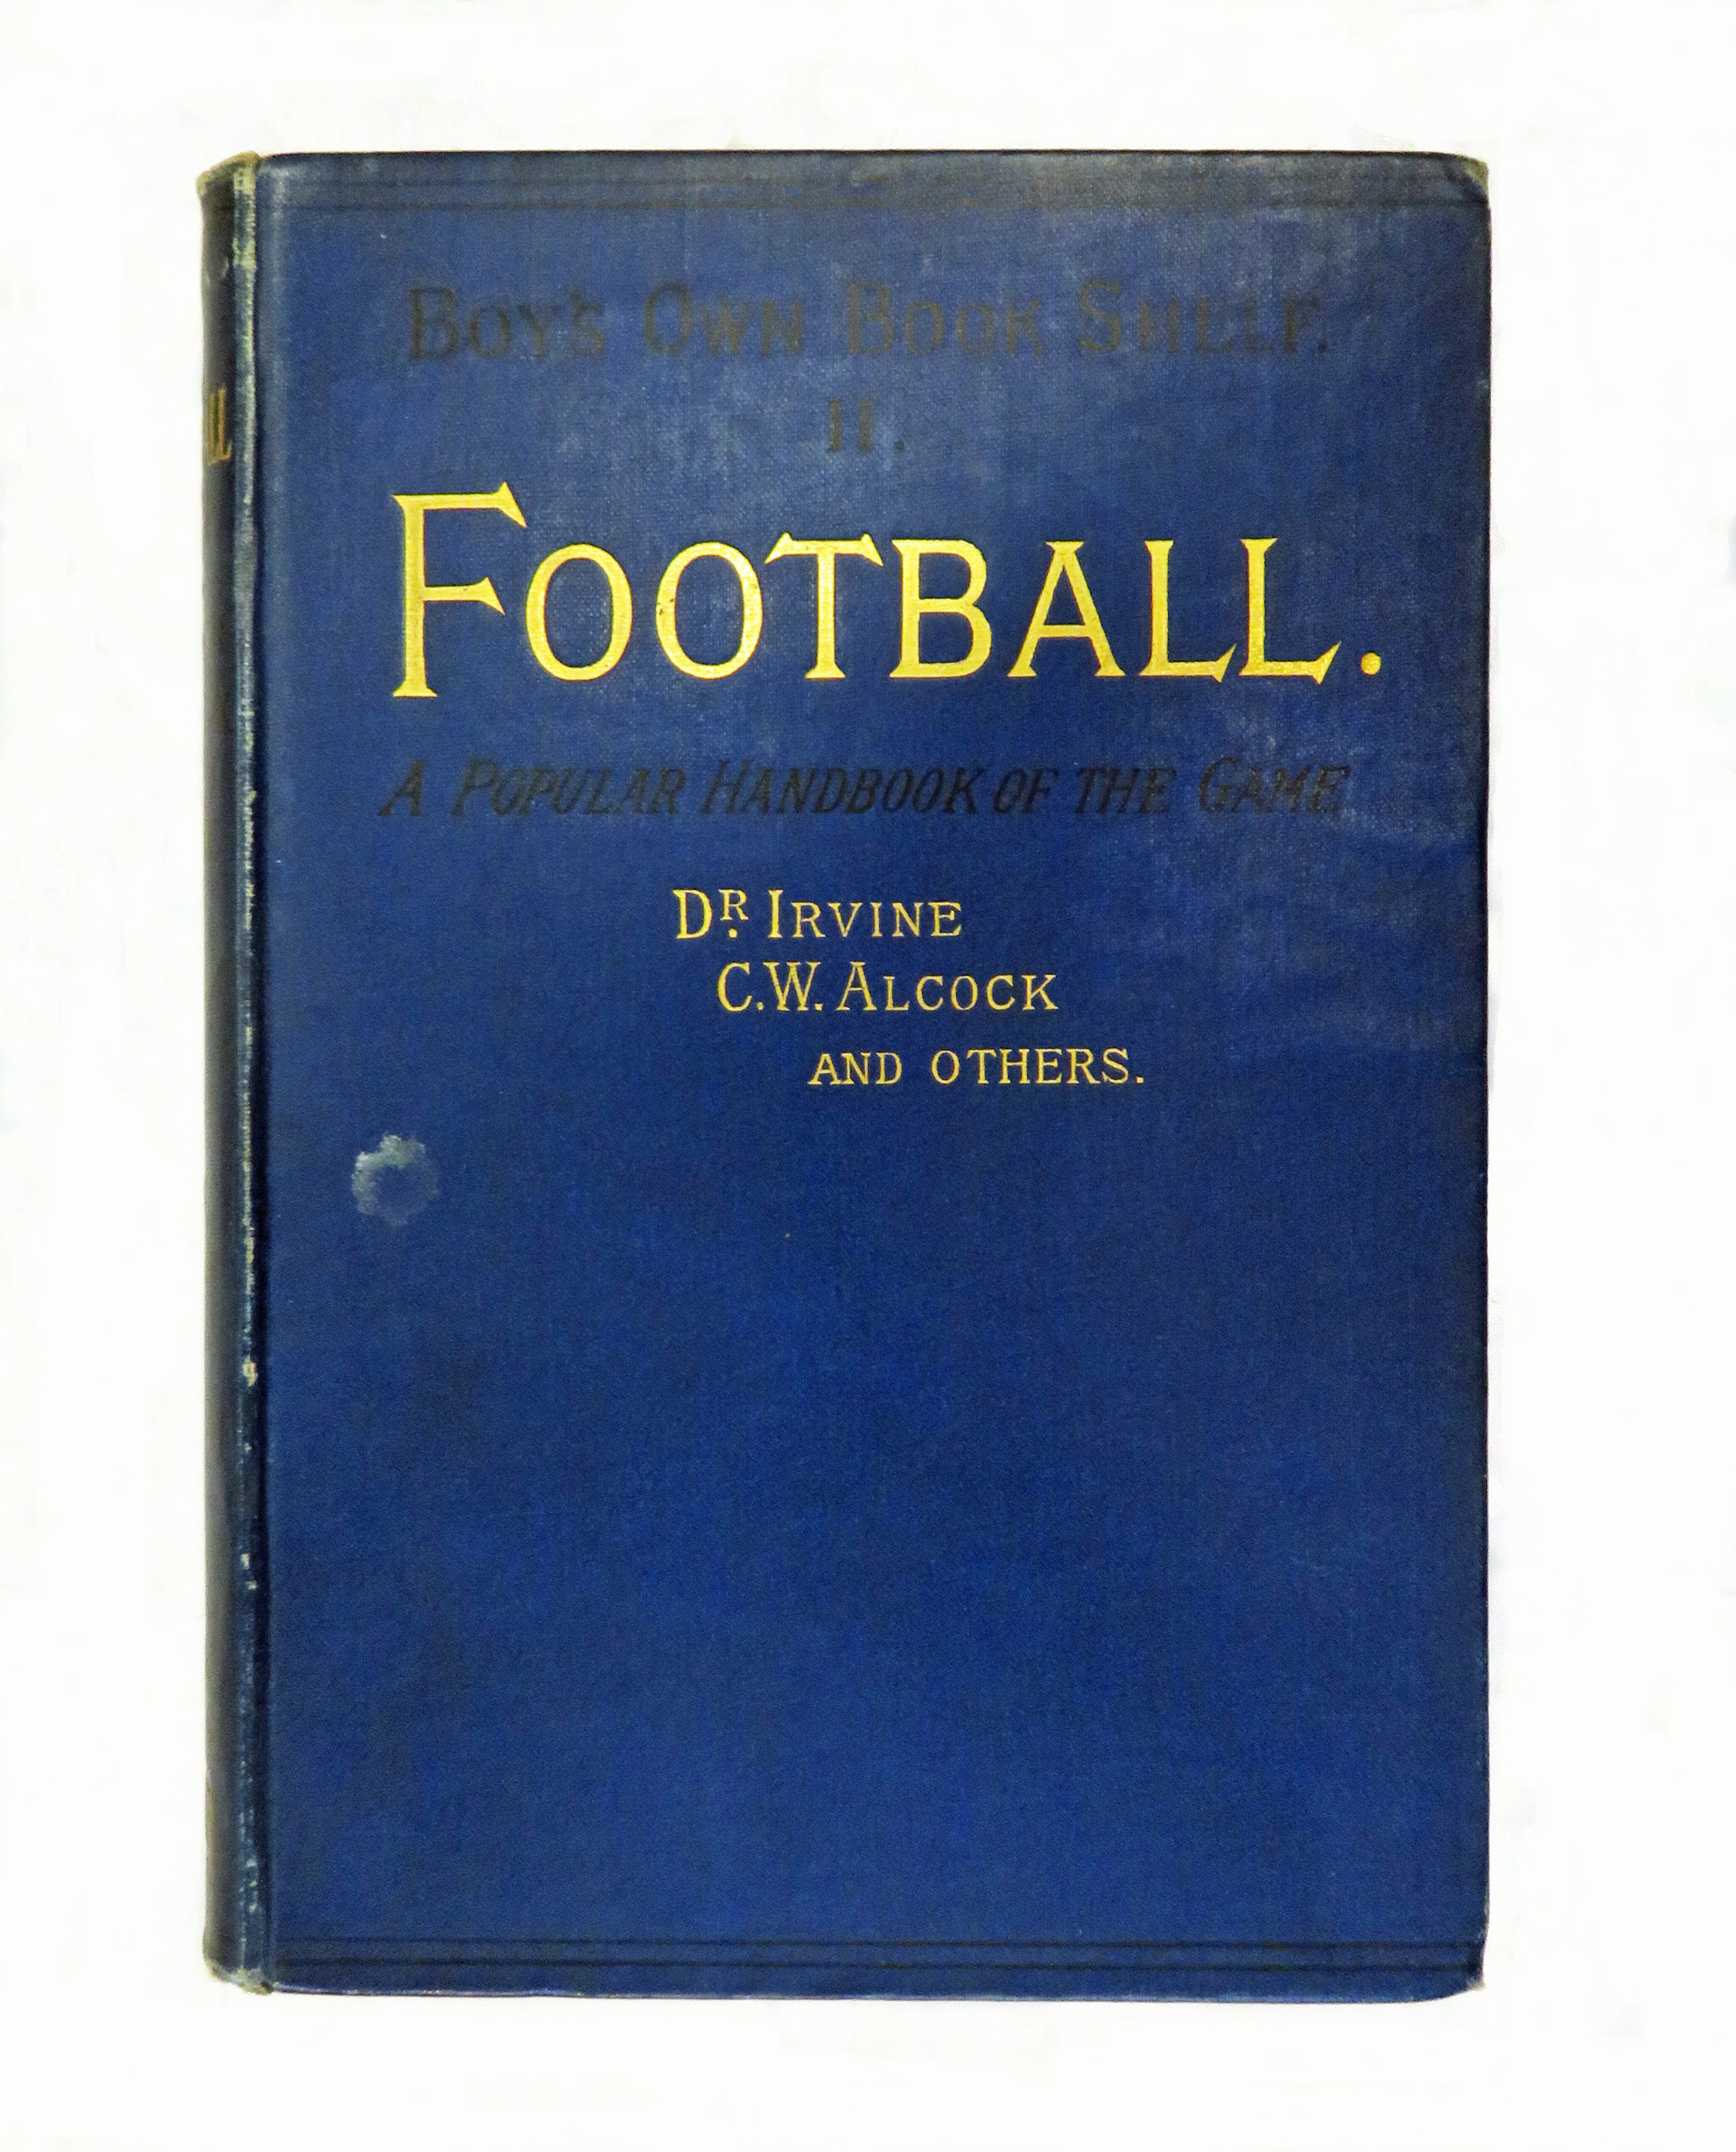 Football A Popular Handbook of the Game